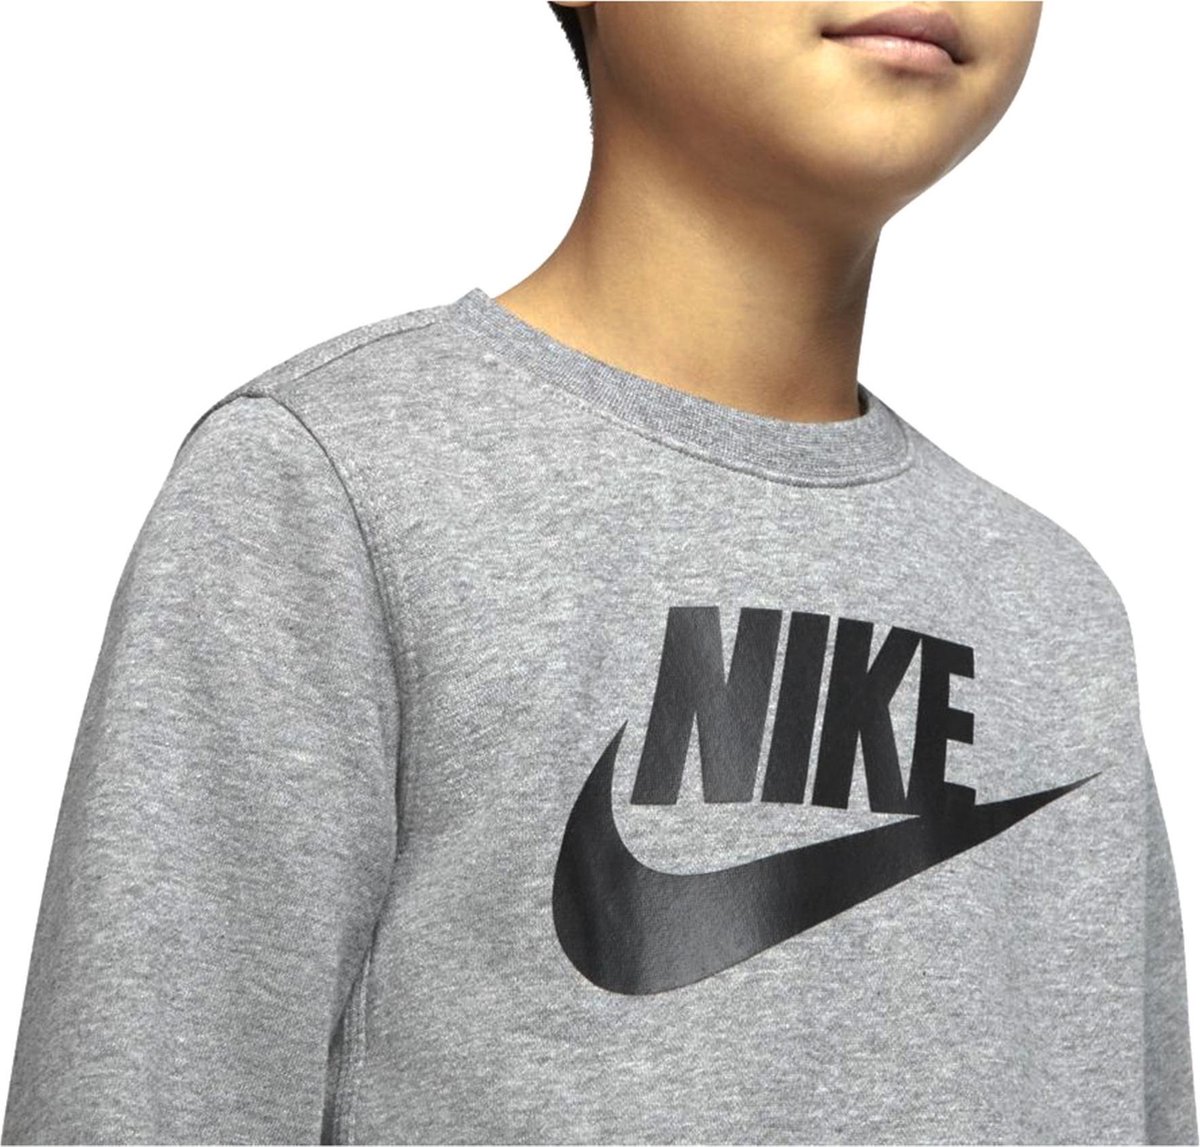 Nike Trui - Jongens - grijs,zwart | bol